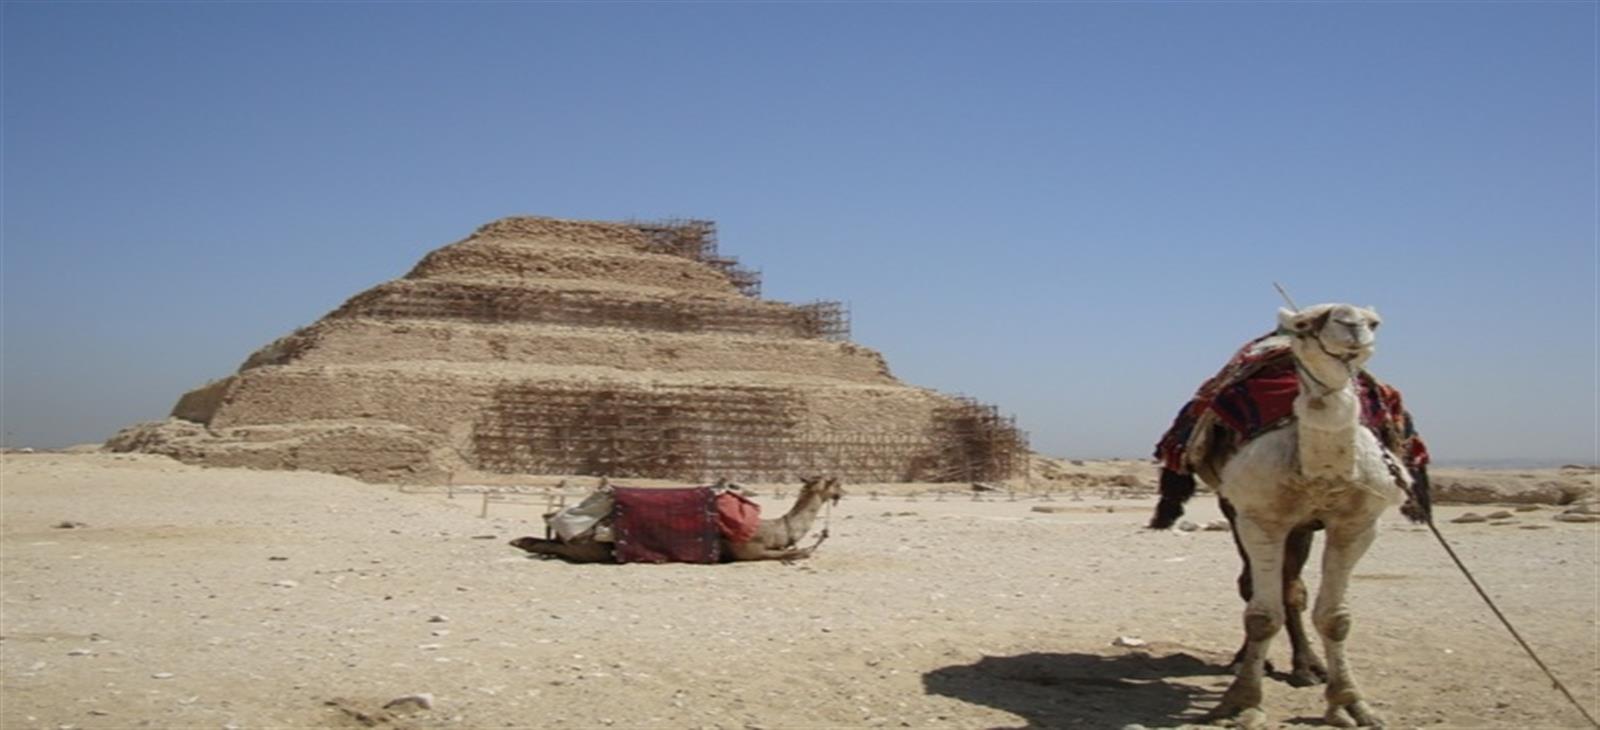 Paso pirámide en Sakkara